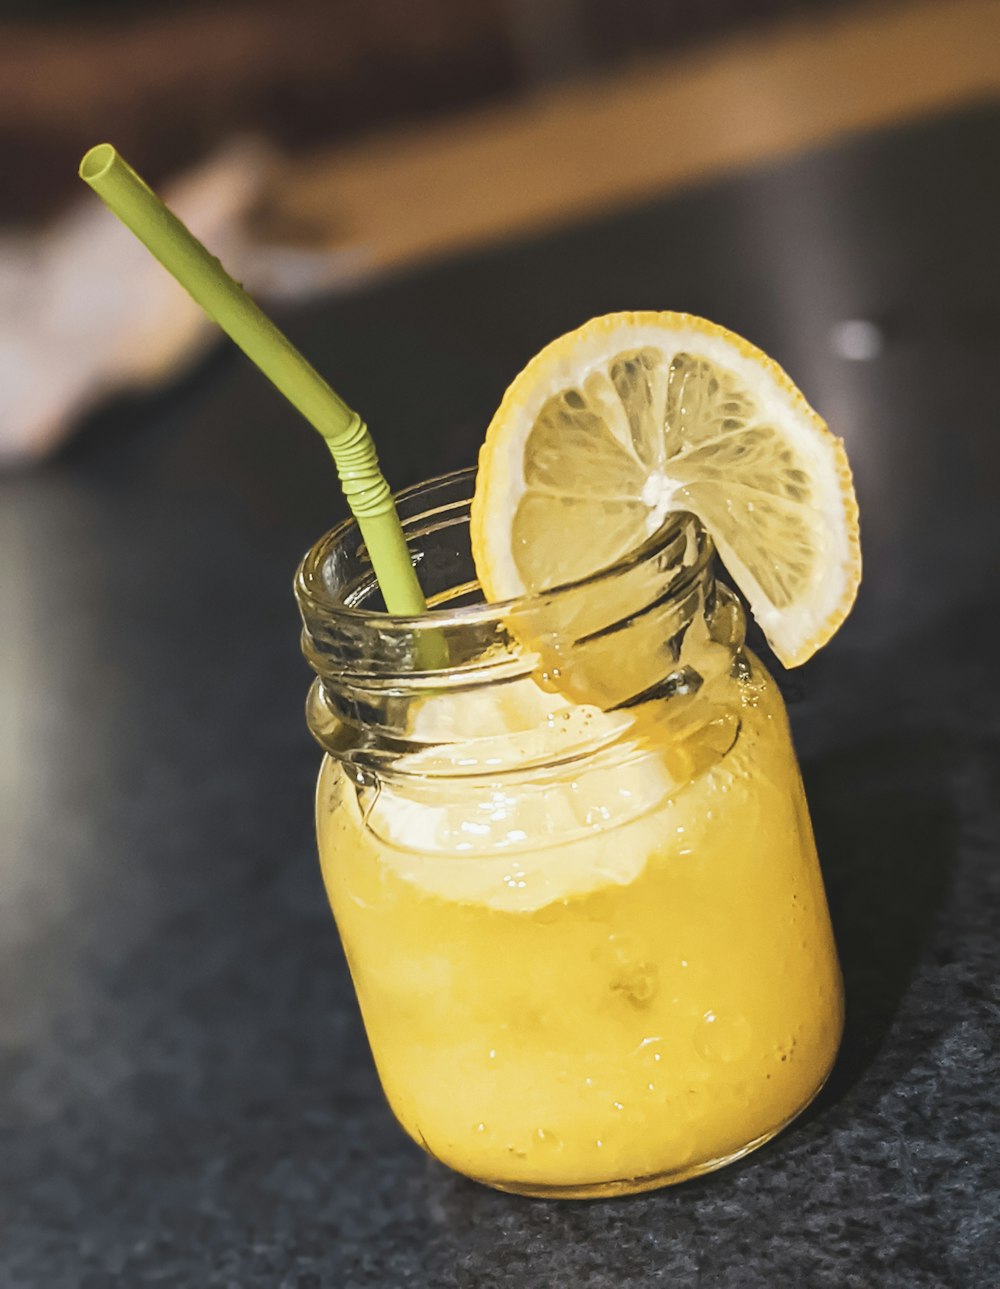 yellow juice in clear glass jar